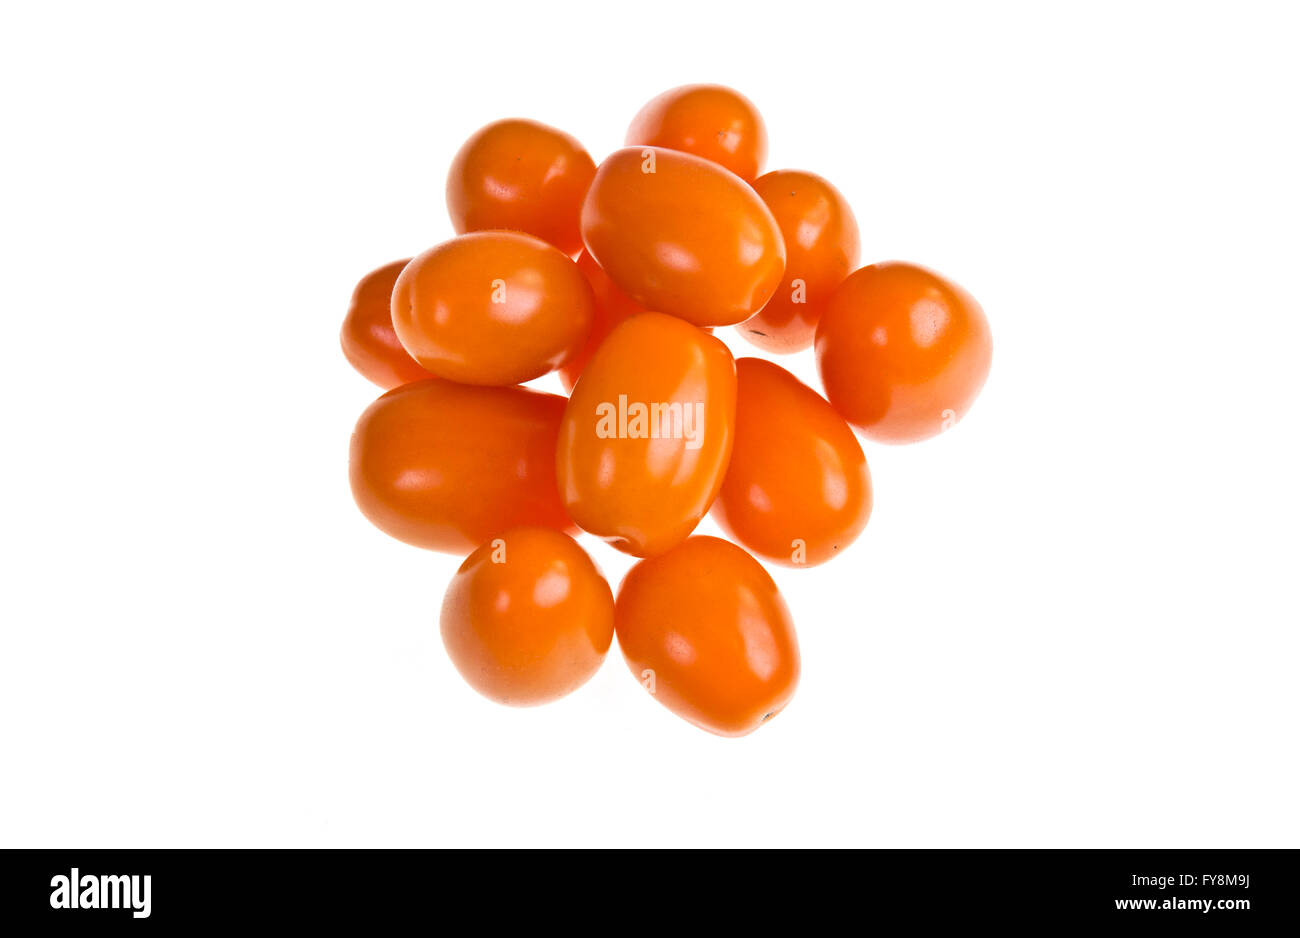 Perino gold tomatoes on a white background Stock Photo - Alamy